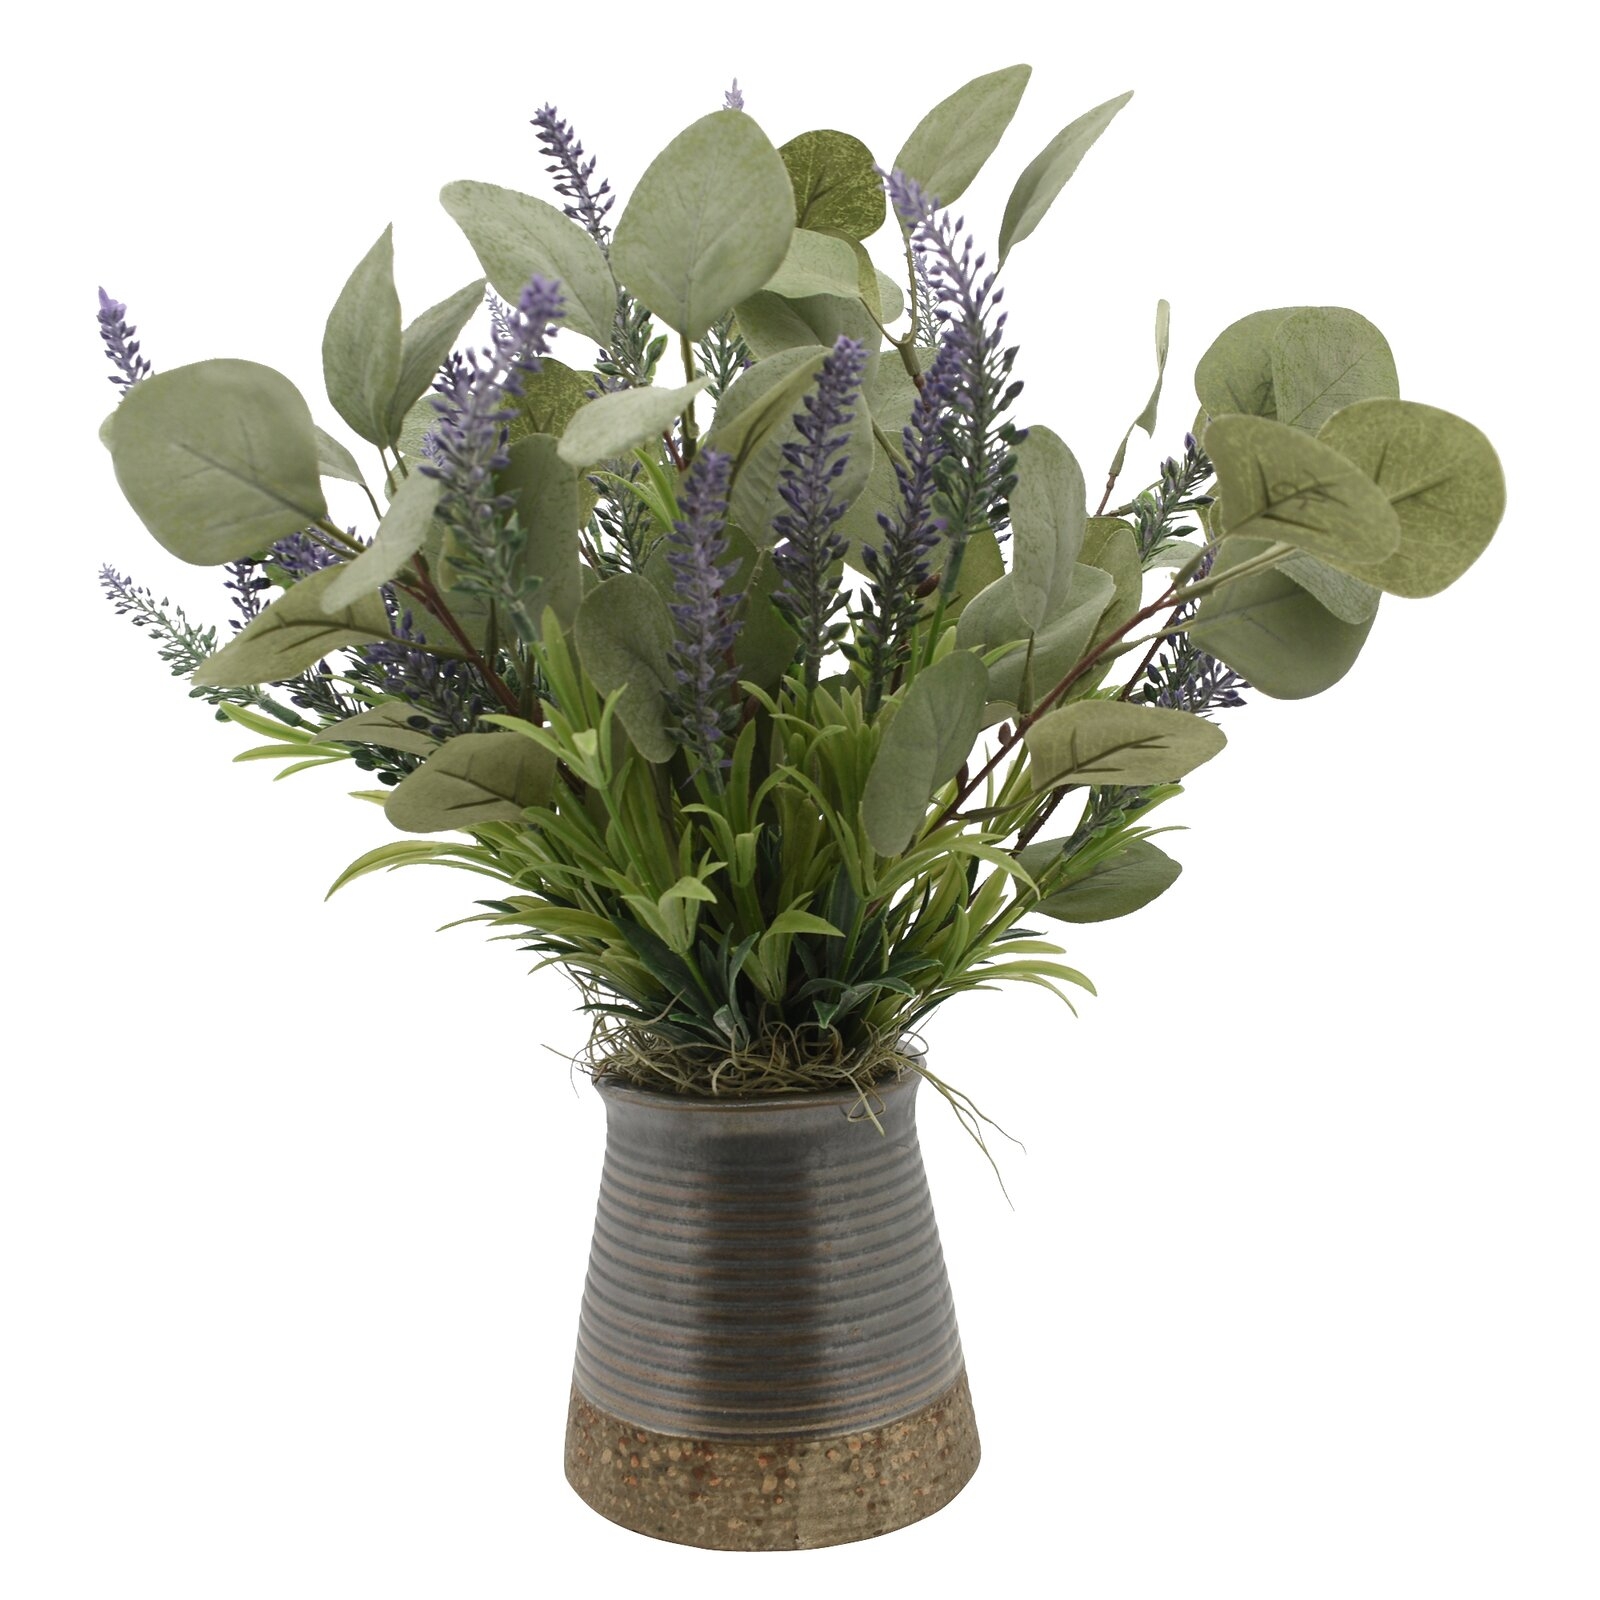 Lavendar and Eucalyptus Mixed Floral Arrangements in Pot - Image 0